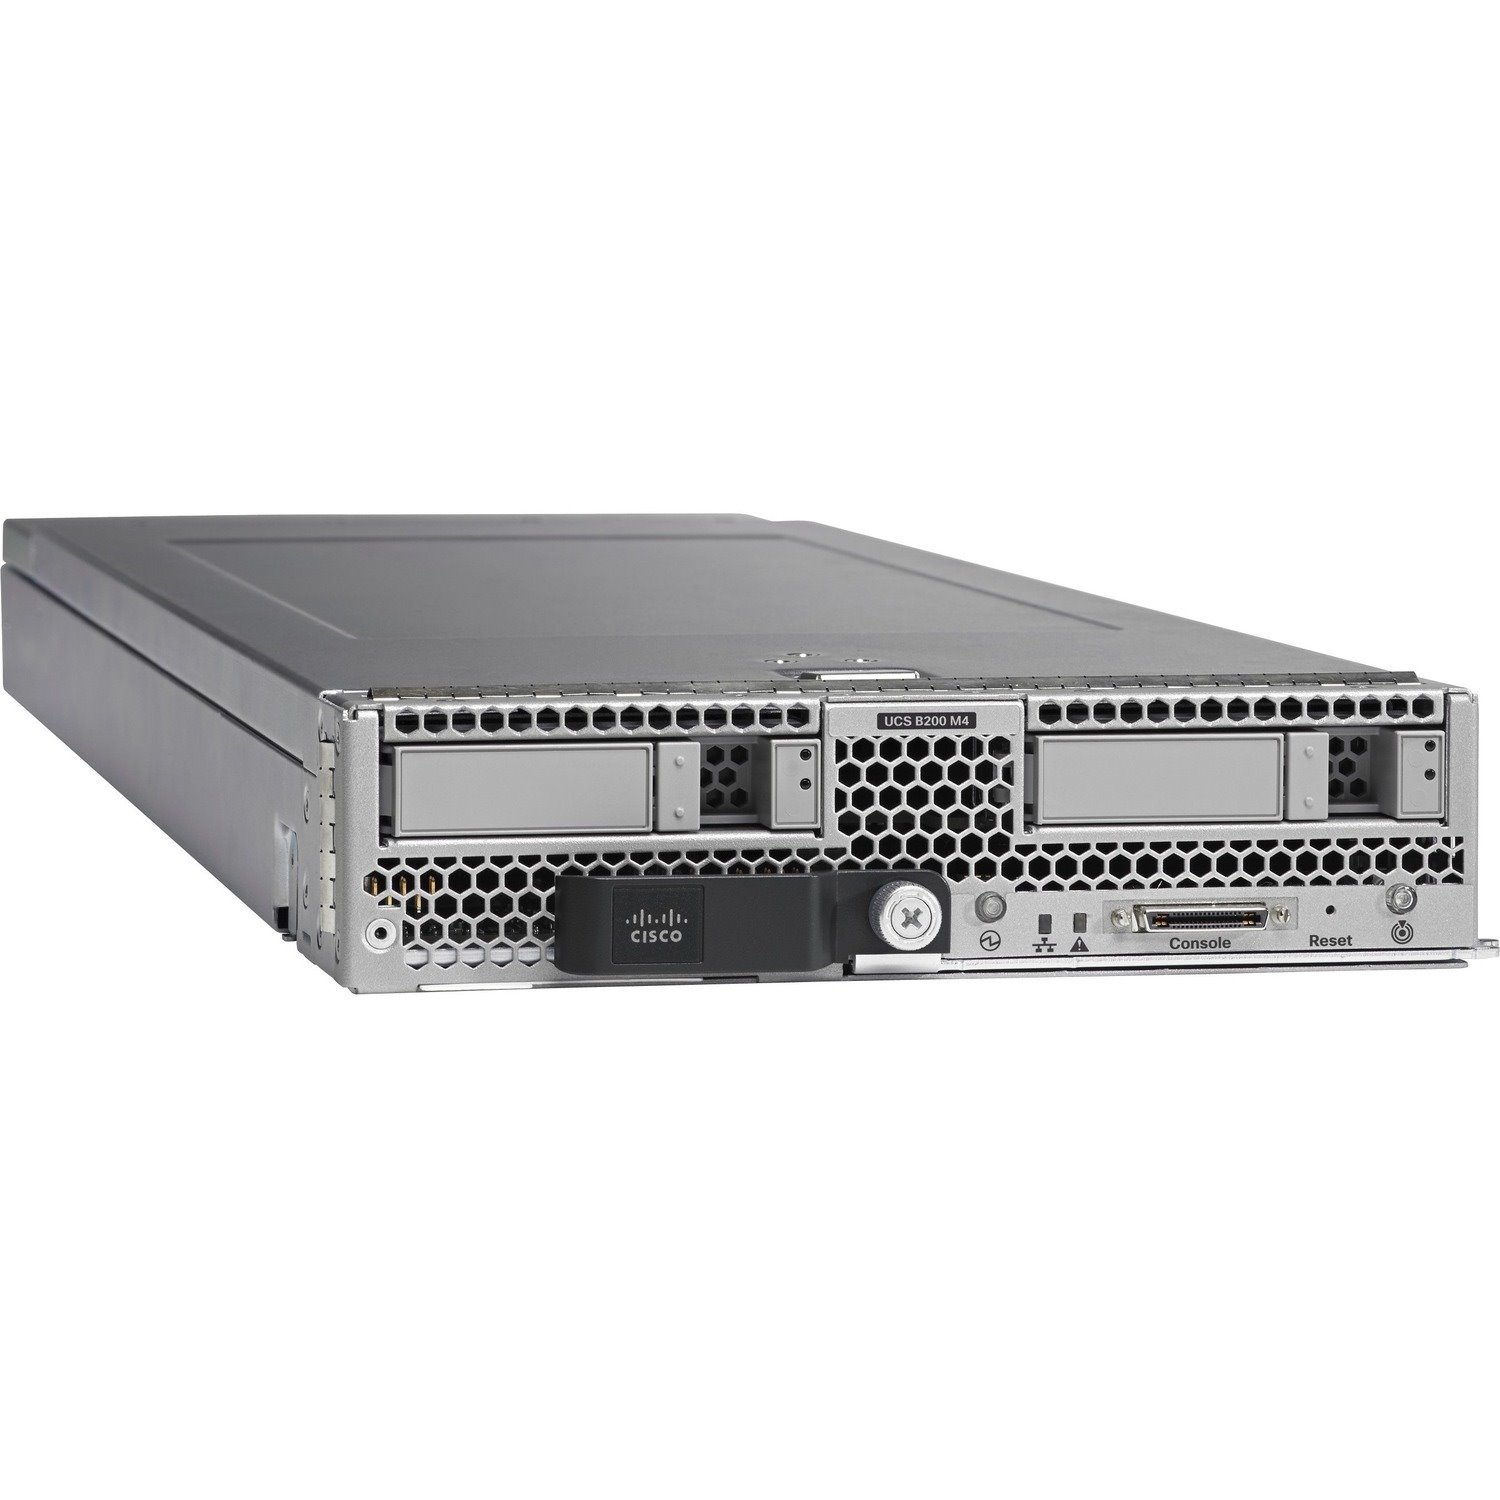 Cisco B200 M4 Blade Server - 2 x Intel Xeon E5-2630 v4 2.20 GHz - 128 GB RAM - 12Gb/s SAS, Serial ATA/600 Controller - Remanufactured